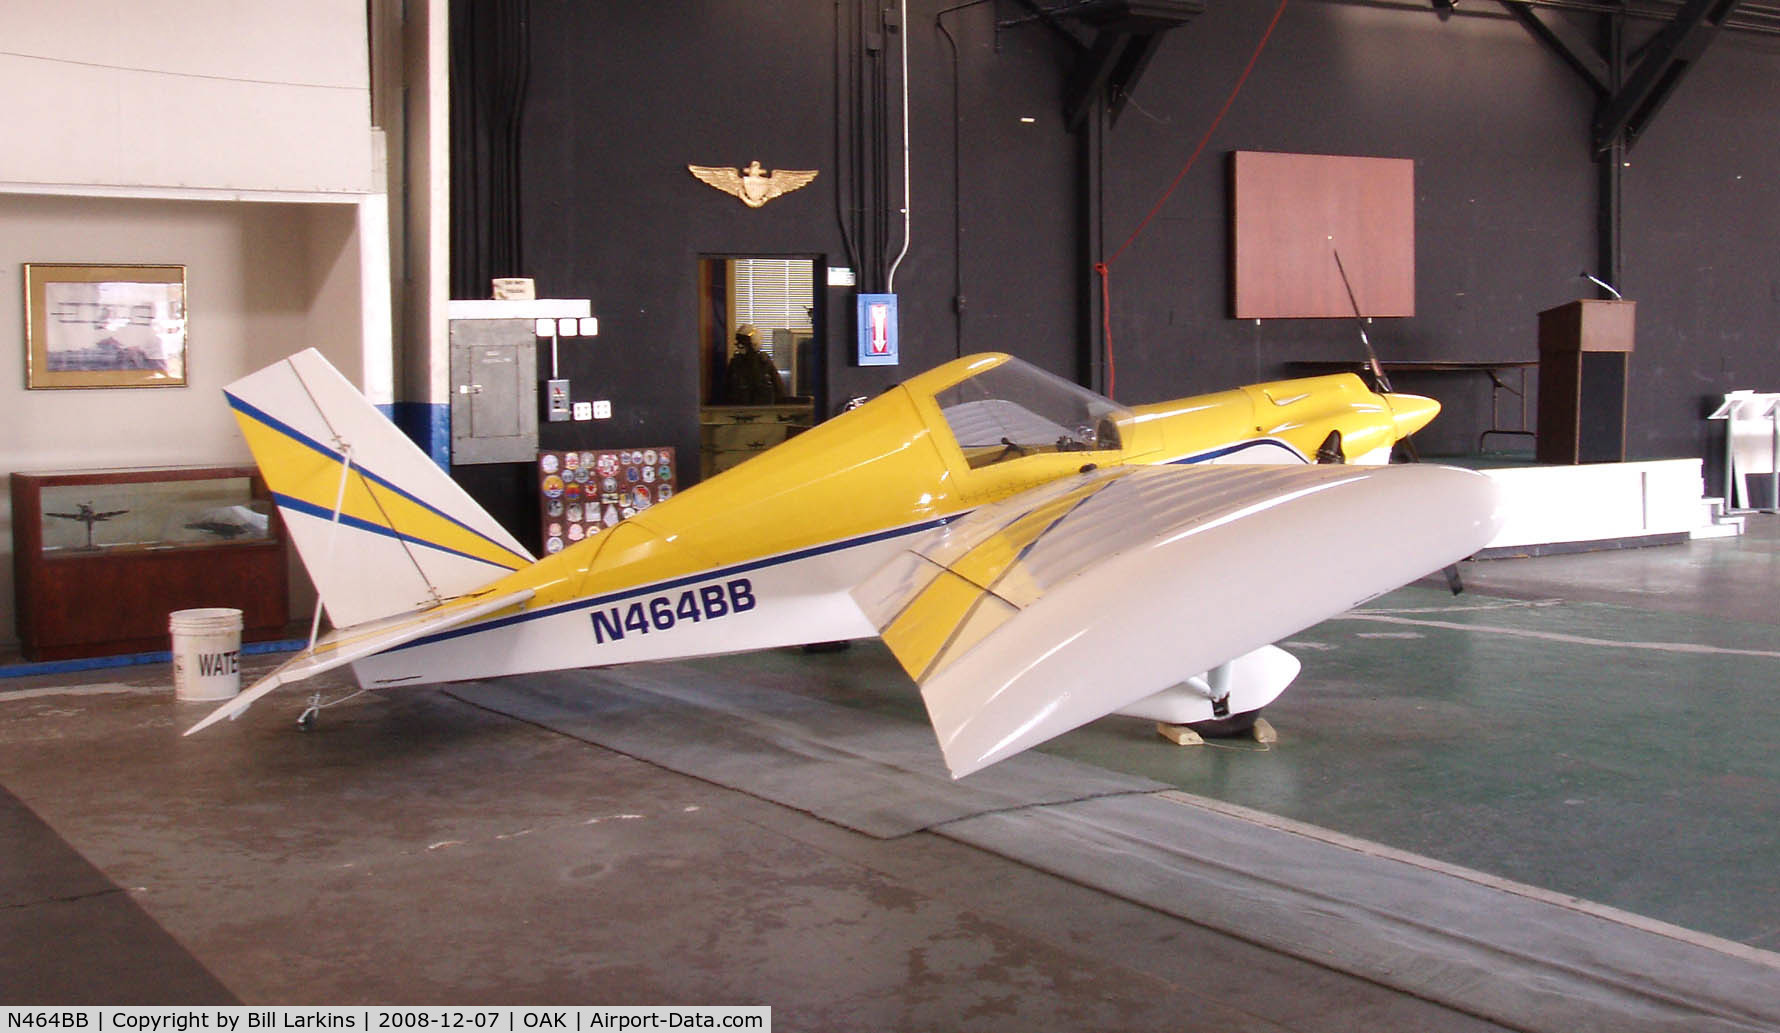 N464BB, 2004 Team Mini-Max 1600R Eros C/N MK703, On exhibit at the Oakland Aviation Museum